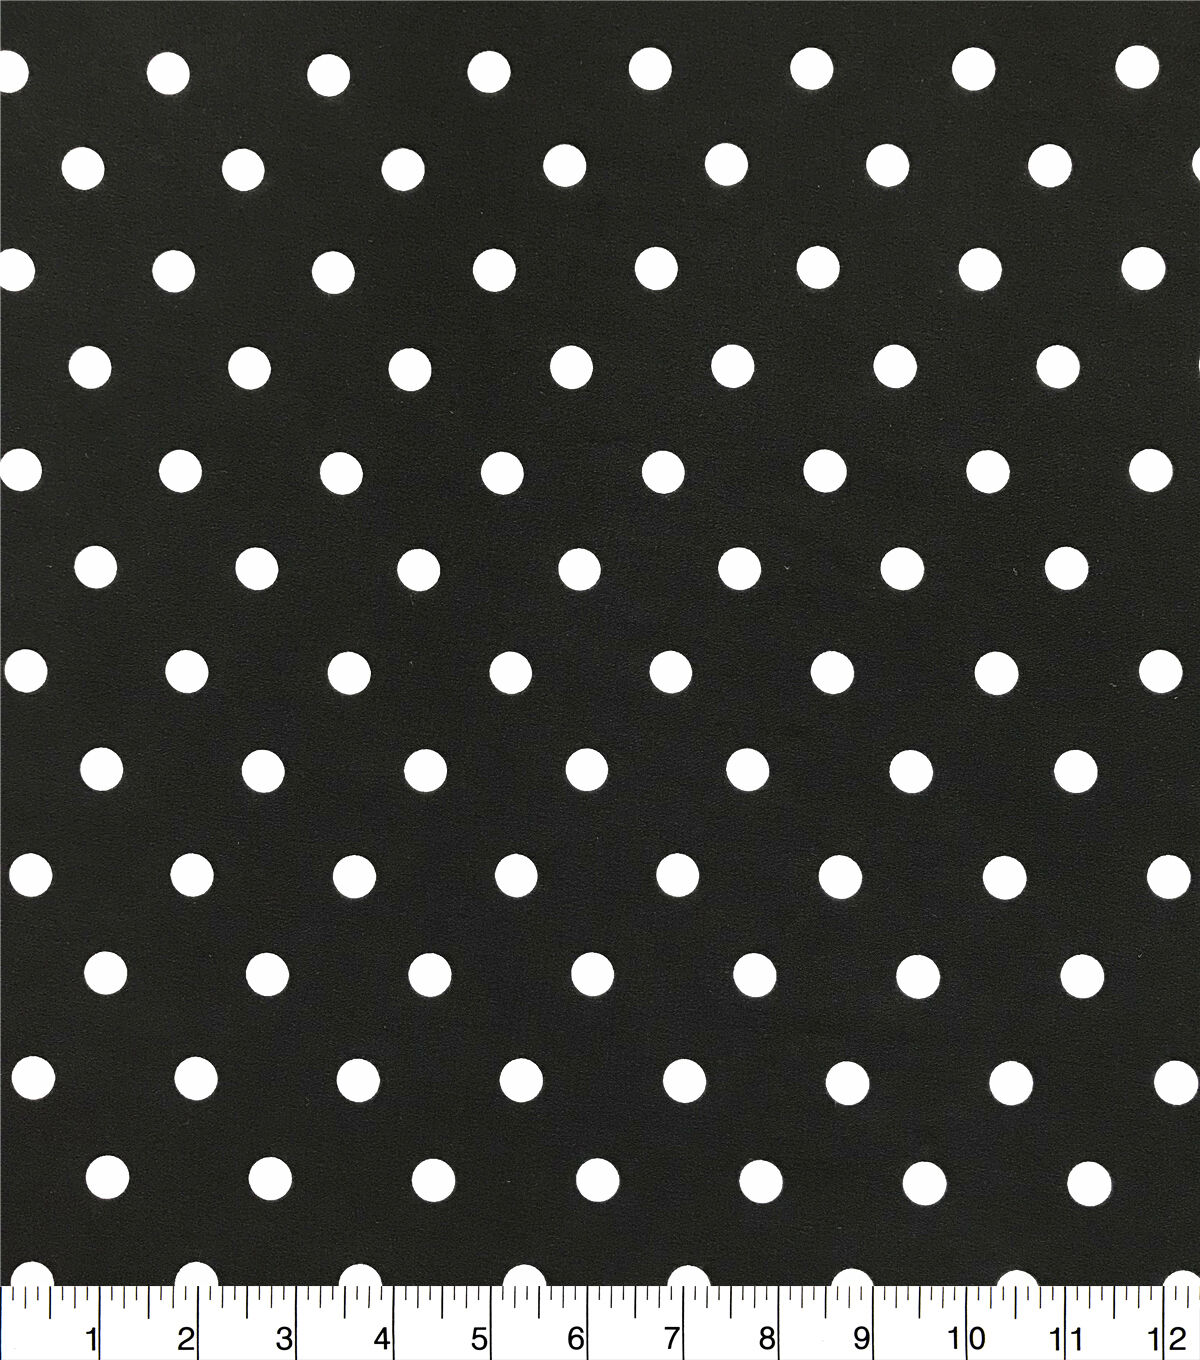 black and white polka dot chiffon fabric